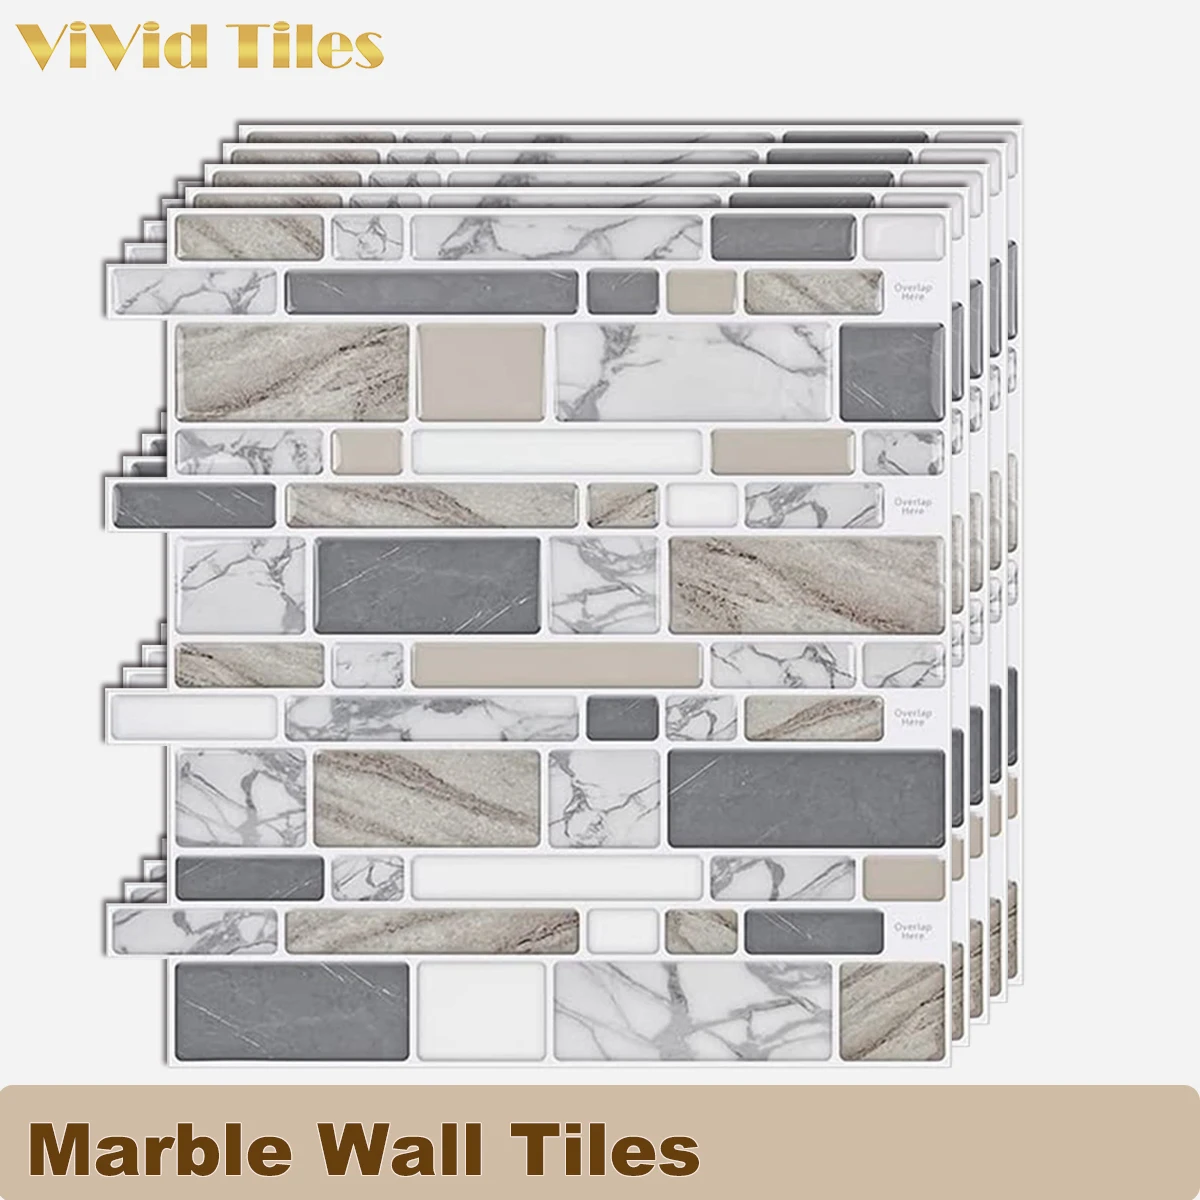 

Vividtiles Big Size Self Adhesive Waterproof Sticker Wallpaper Peel and Stick Mosaic Brick Effect Tiles - 1 Sheets